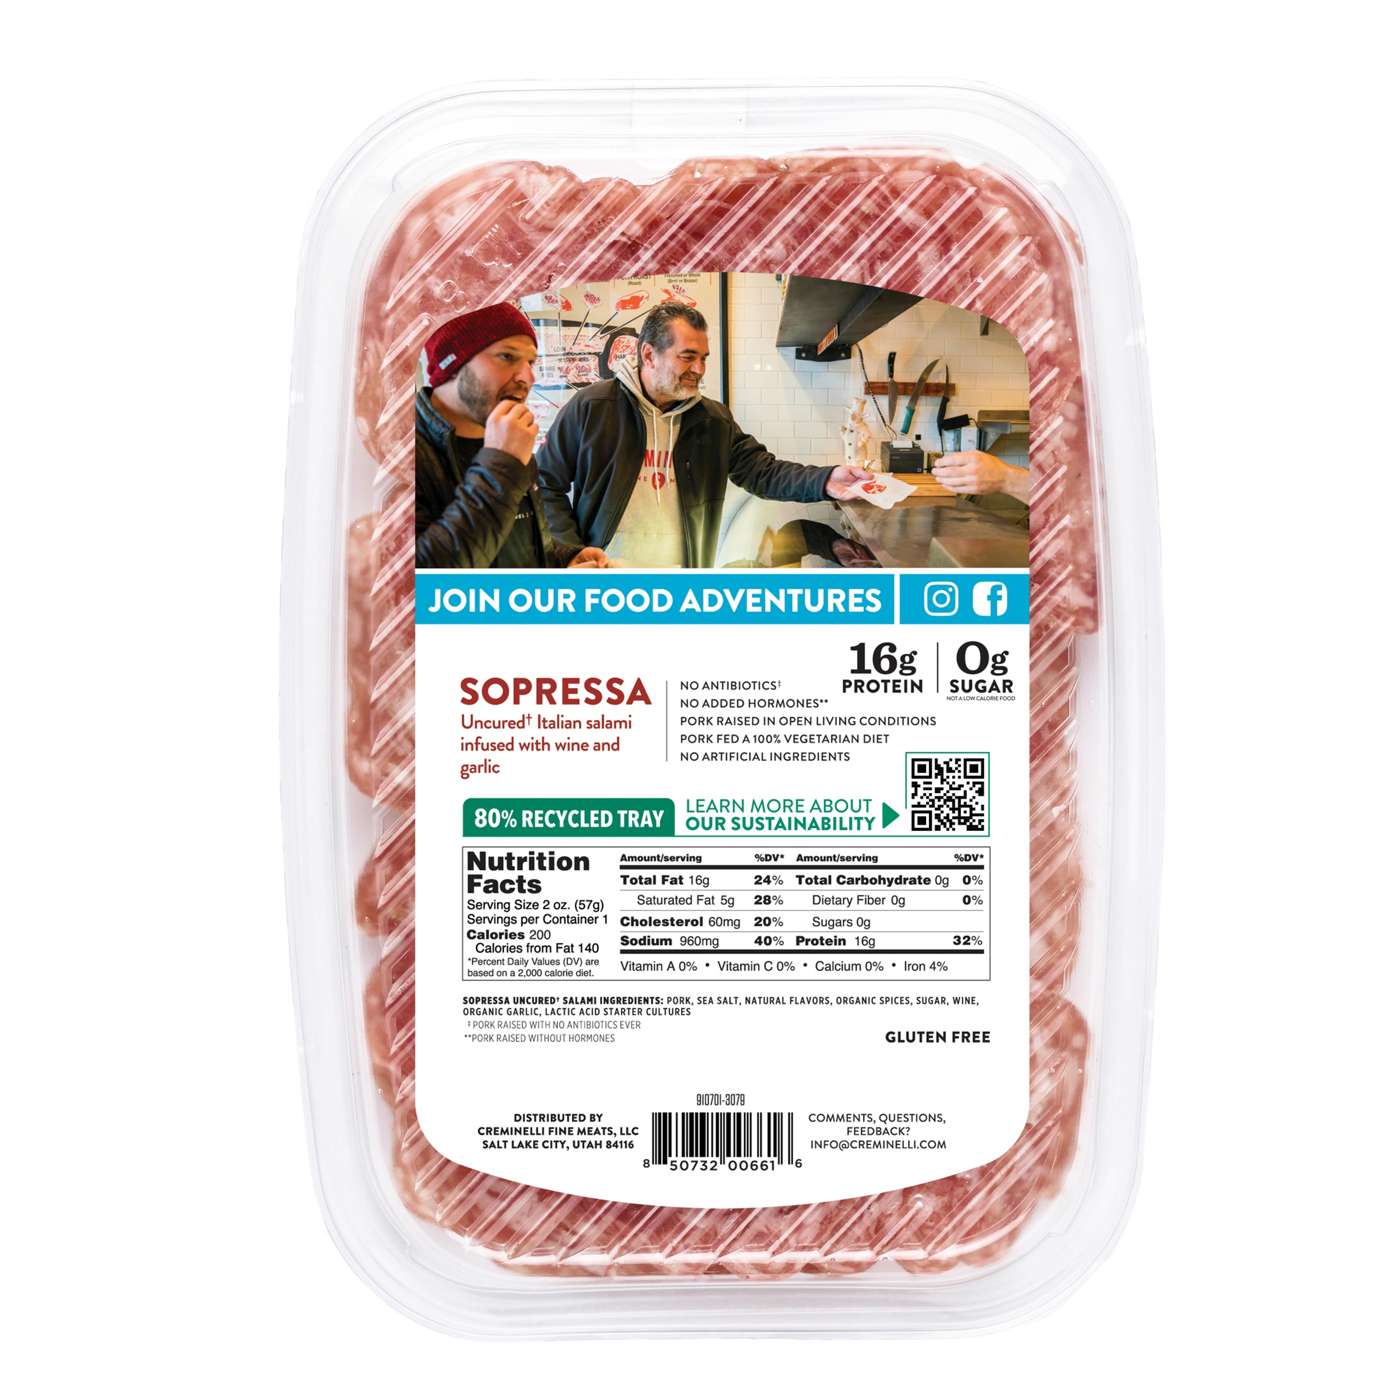 Creminelli Fine Meats Sliced Sopressa; image 2 of 2